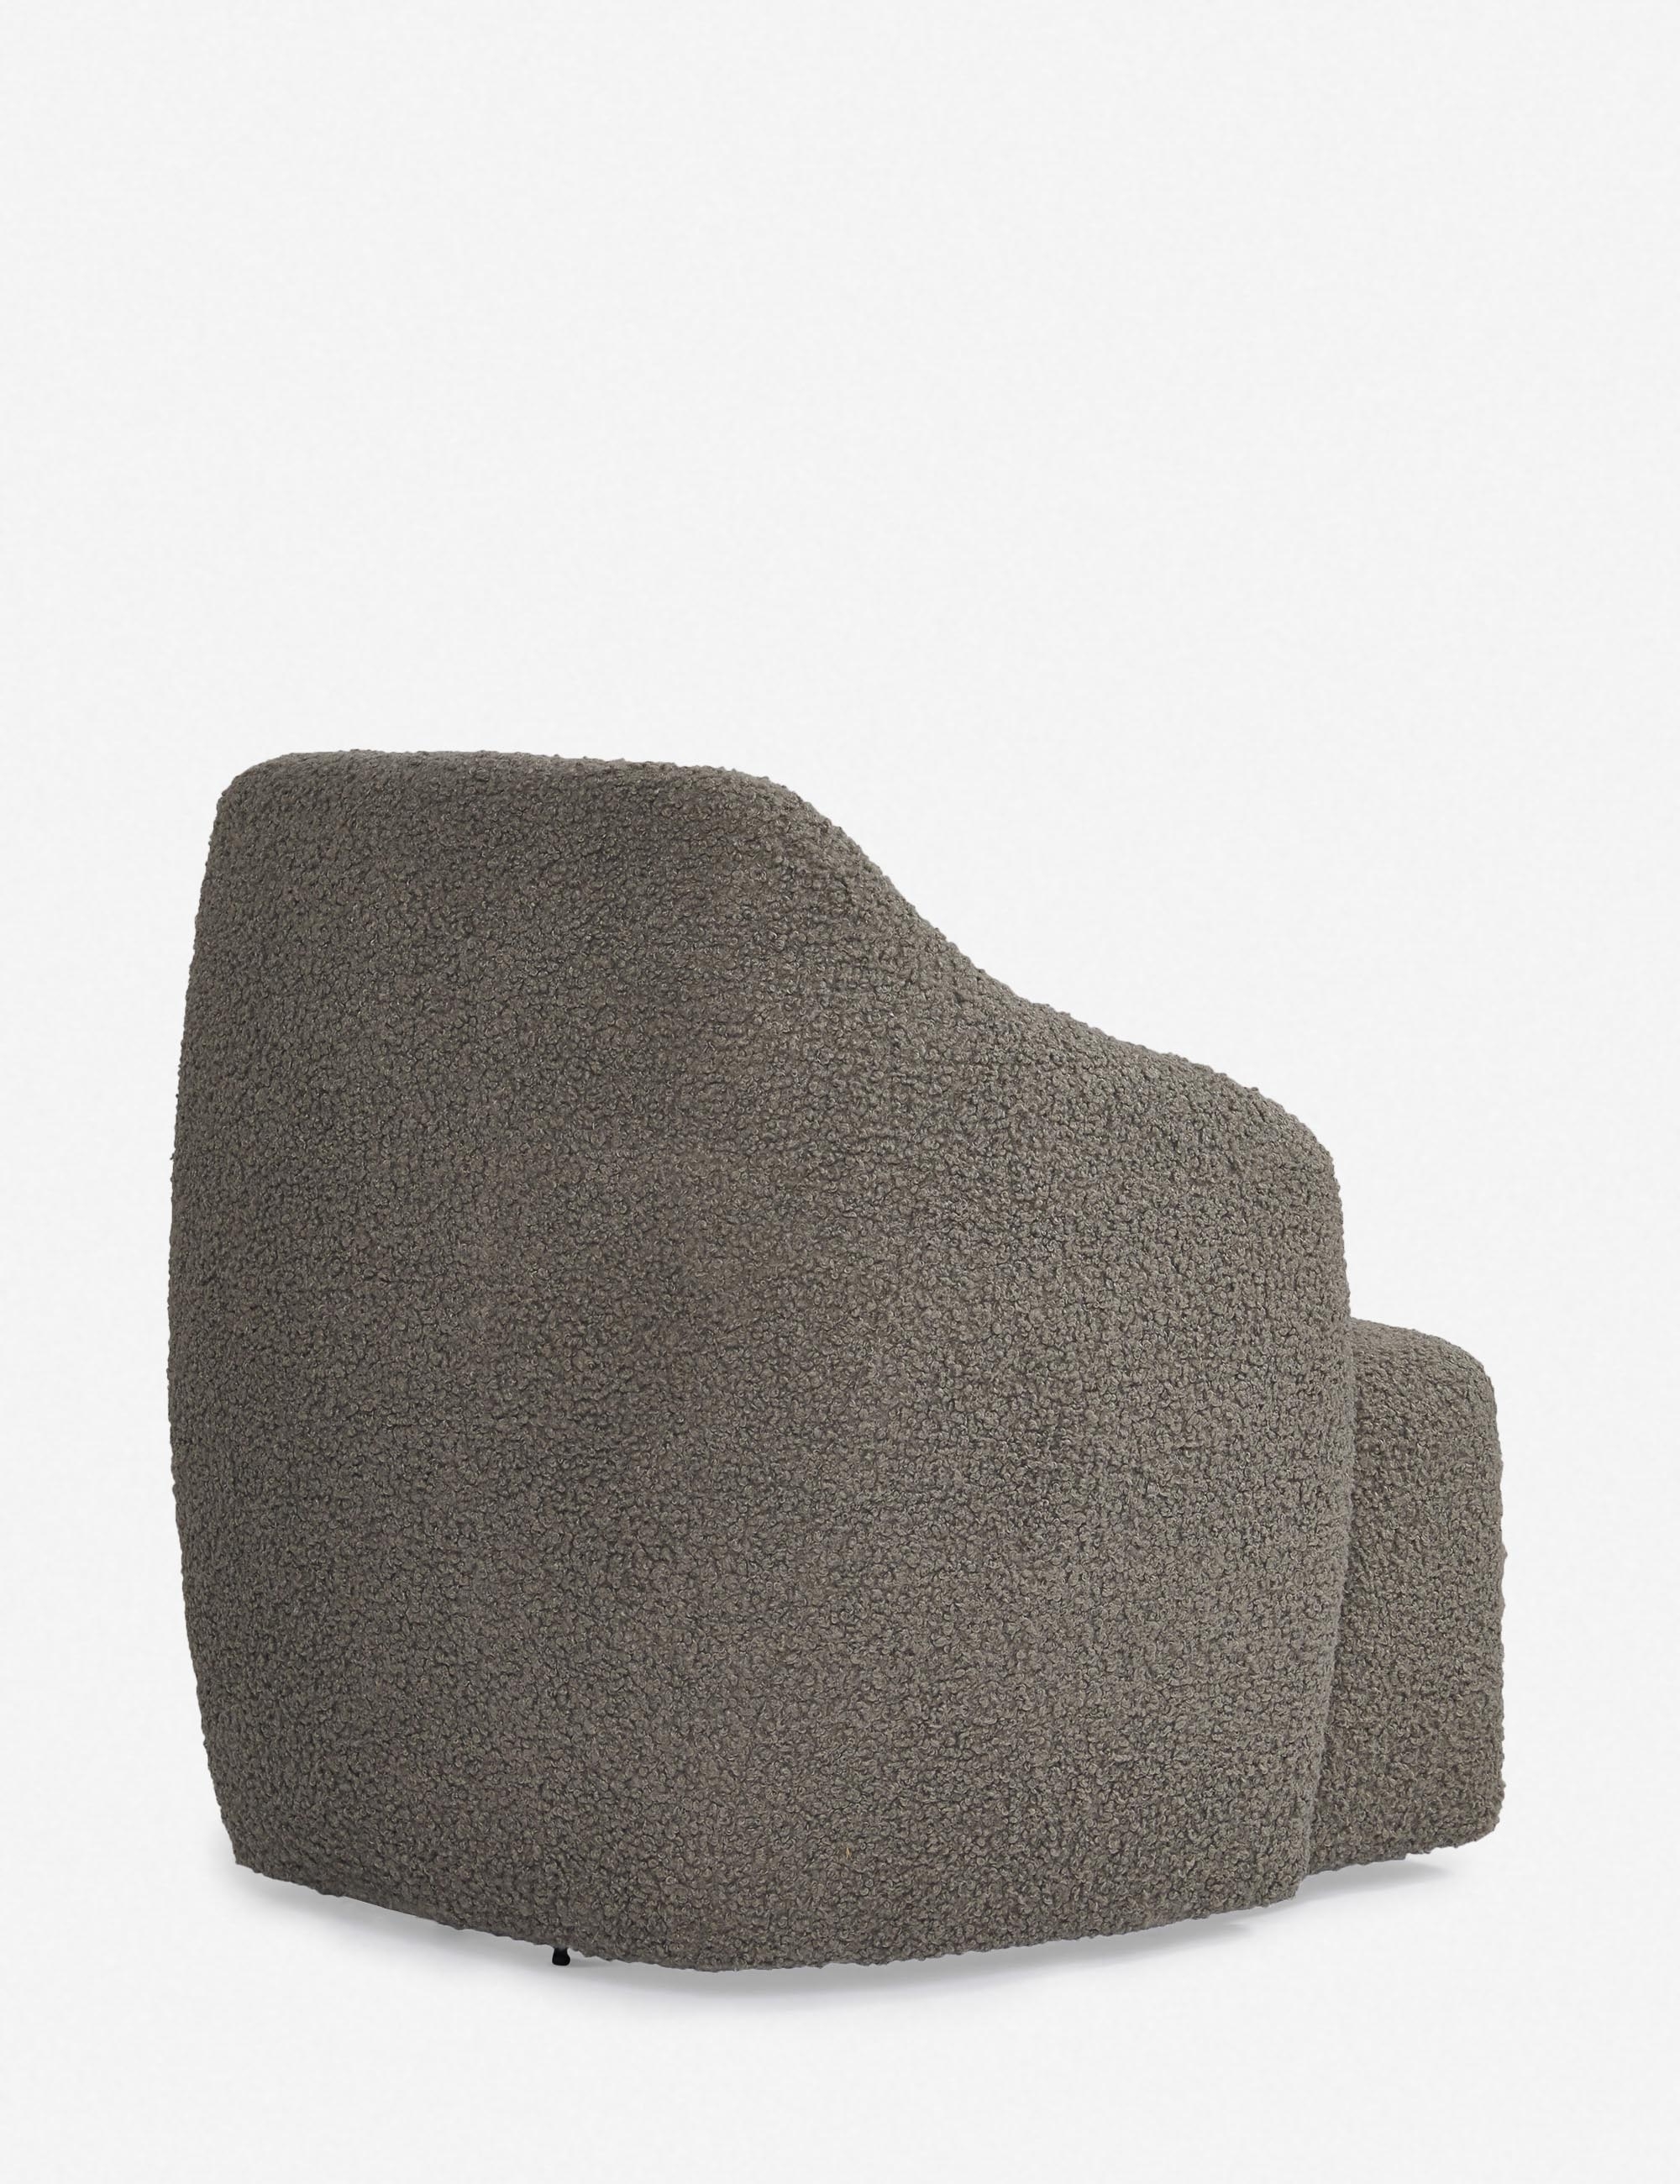 Tobi Swivel Chair, Gray - Image 3